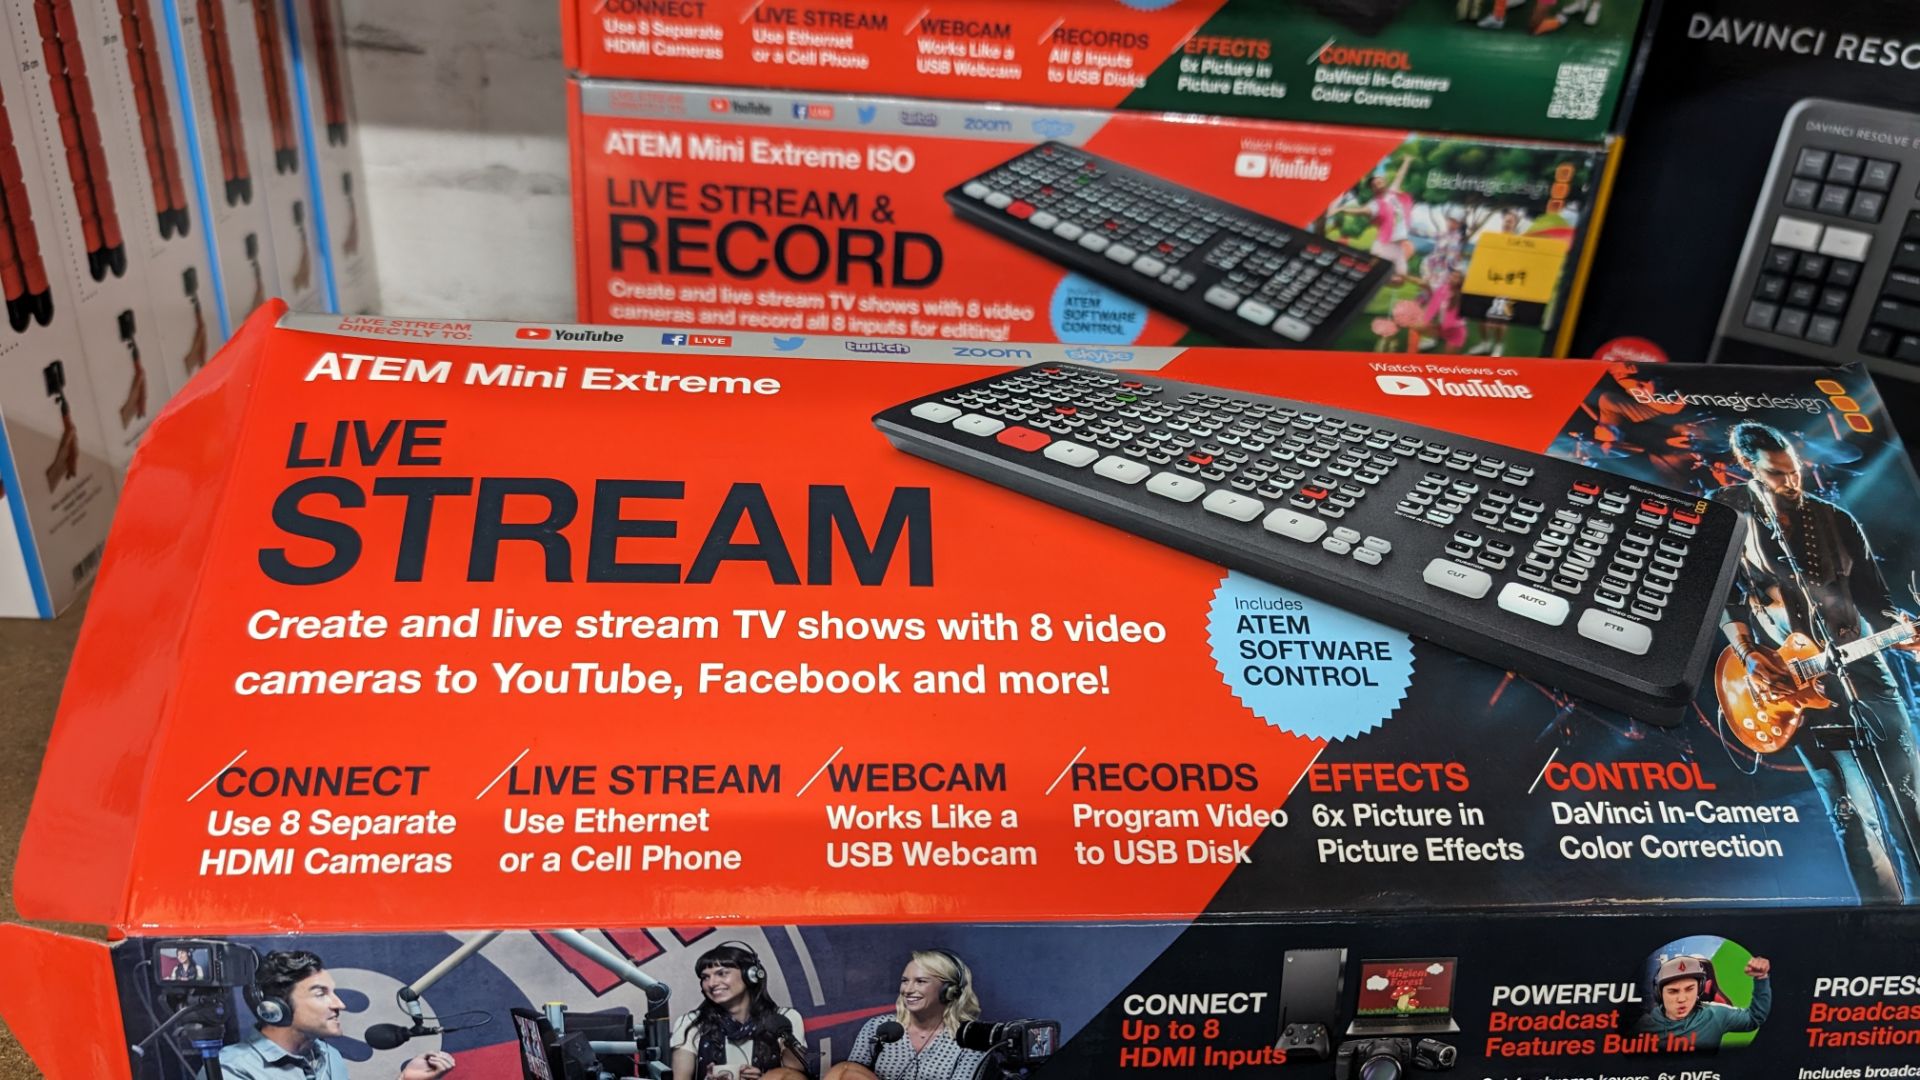 Blackmagic Design ATEM Mini Extreme live stream and record editing keyboard - Image 2 of 5